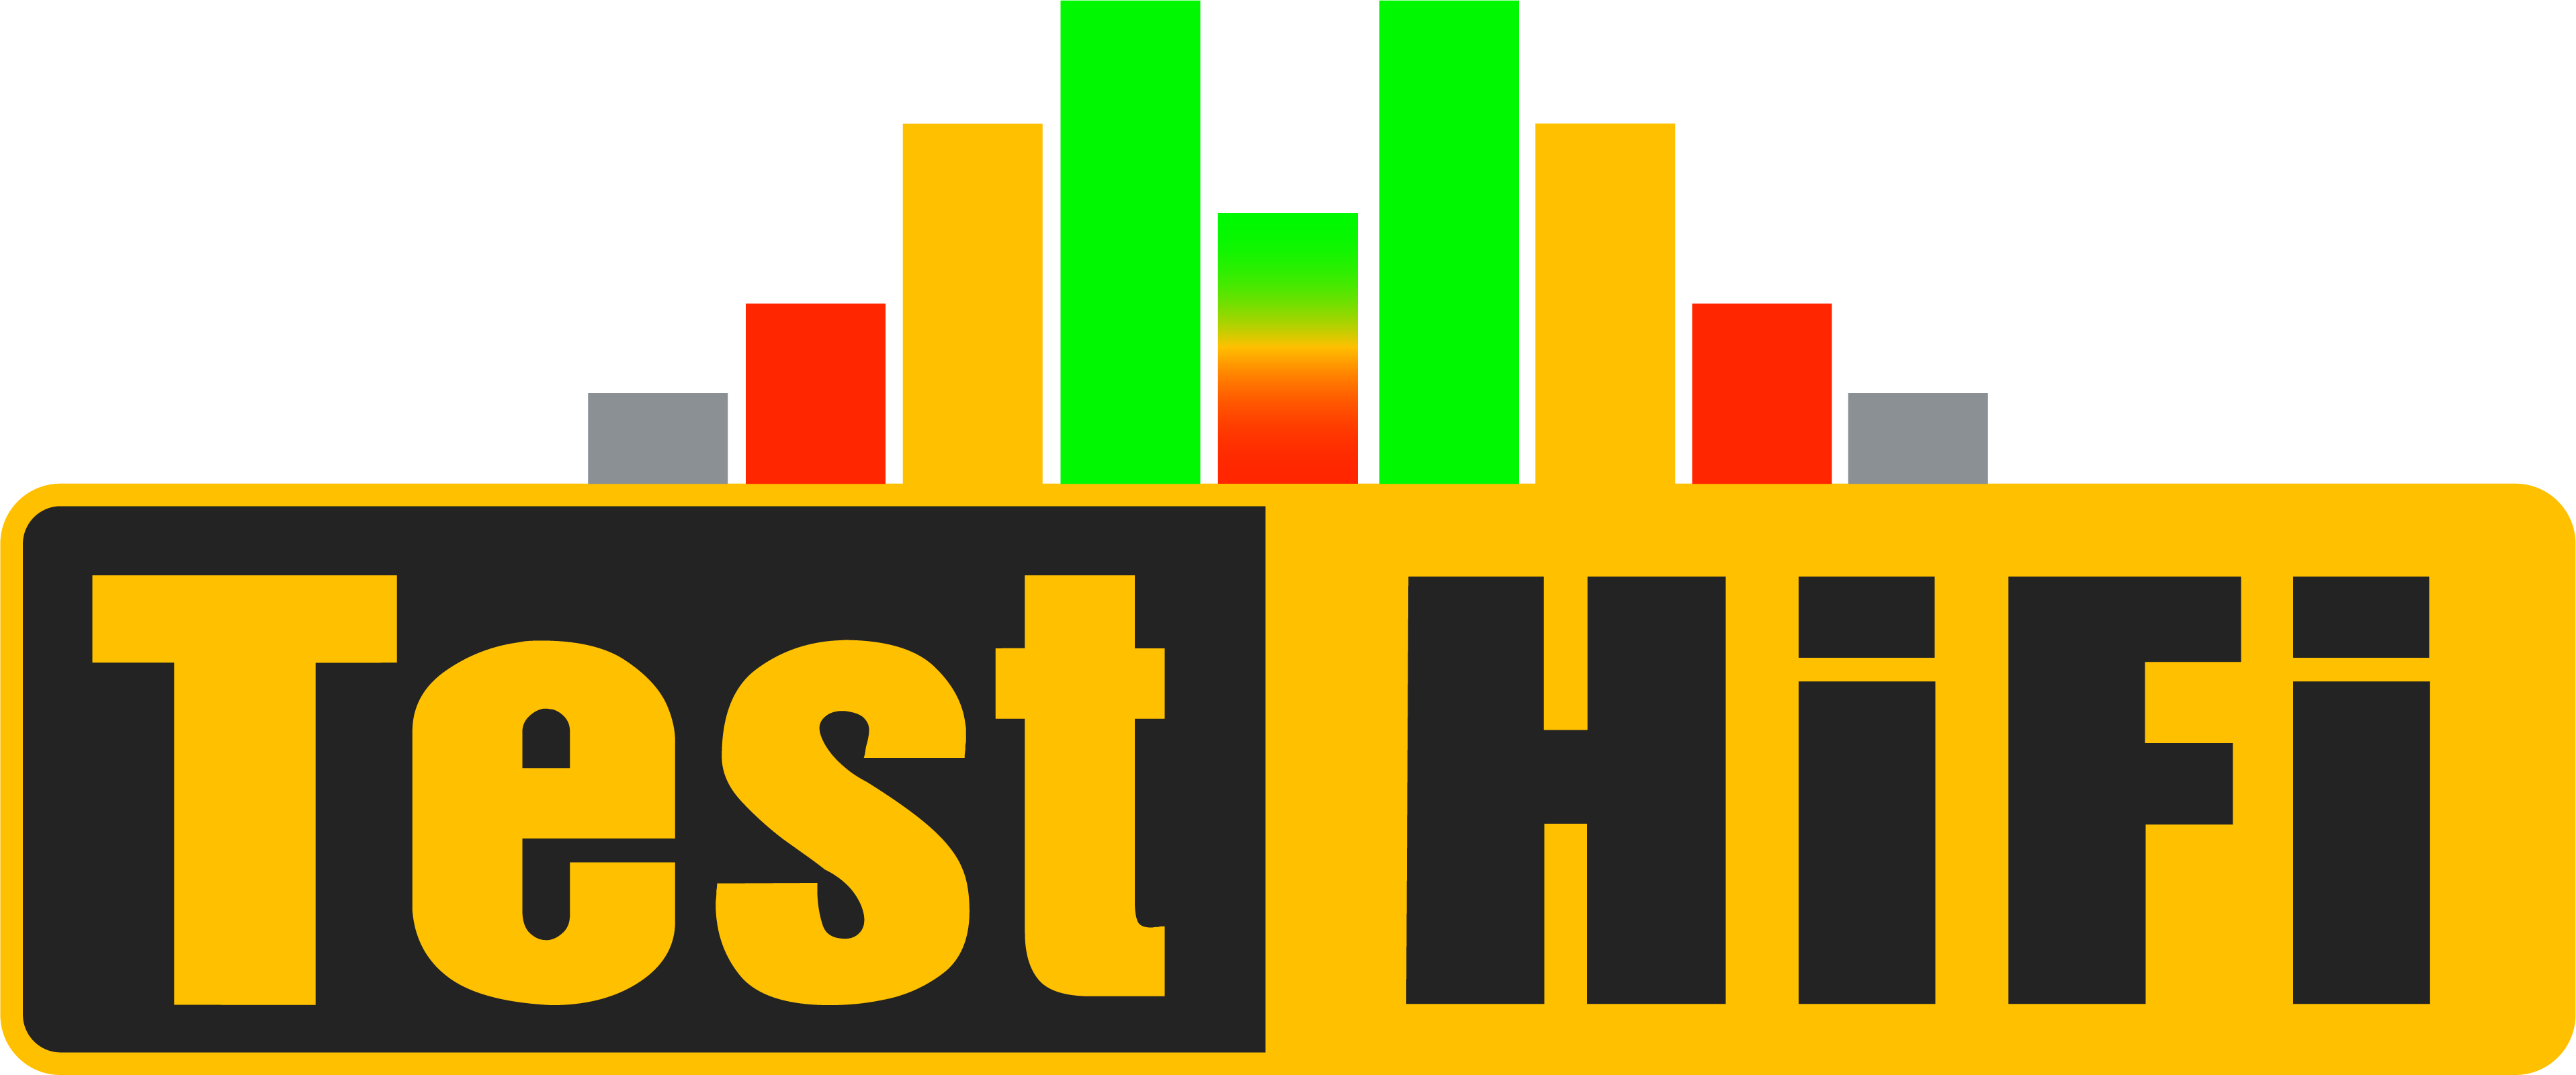 Listening Position Measurements - TestHiFi